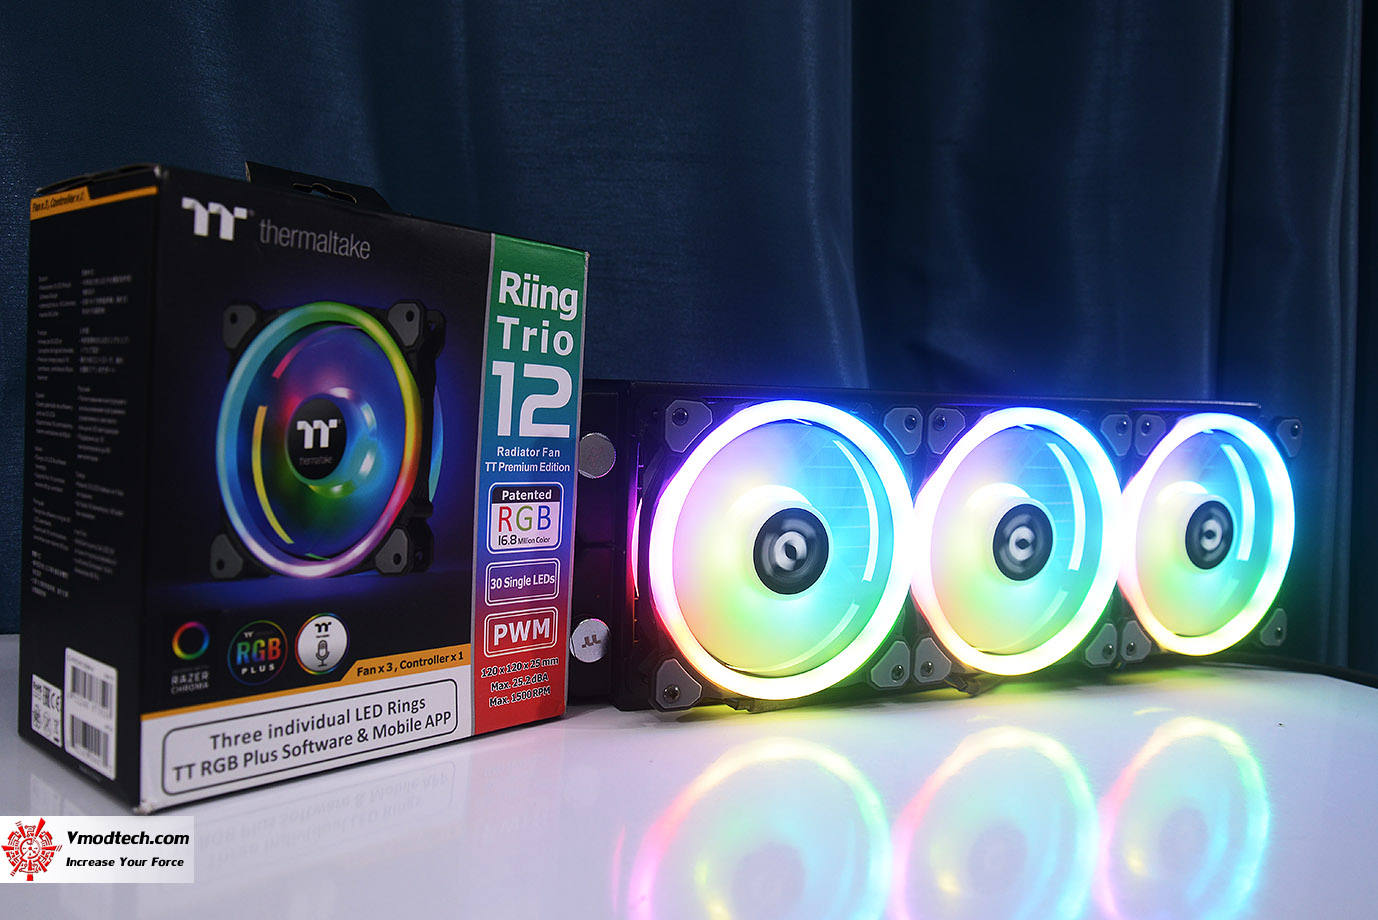 dsc 7956 Riing Trio 12 LED RGB Radiator Fan TT Premium Edition (3 Fan Pack) Review